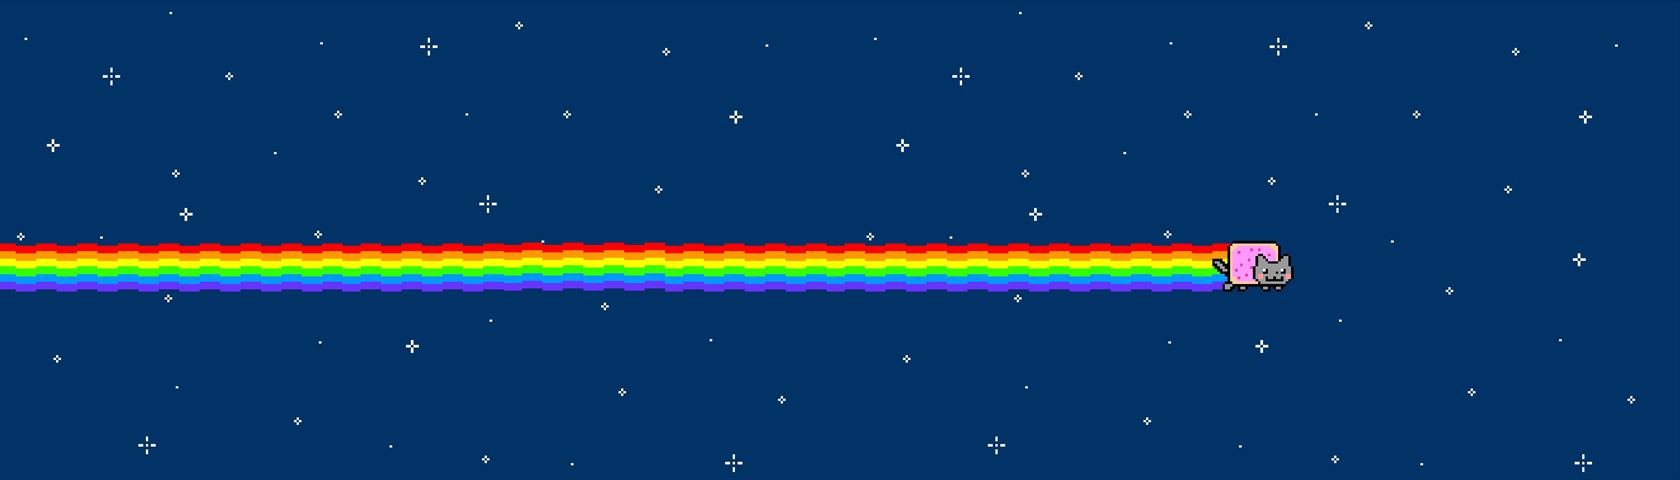 Nyan Cat in Space